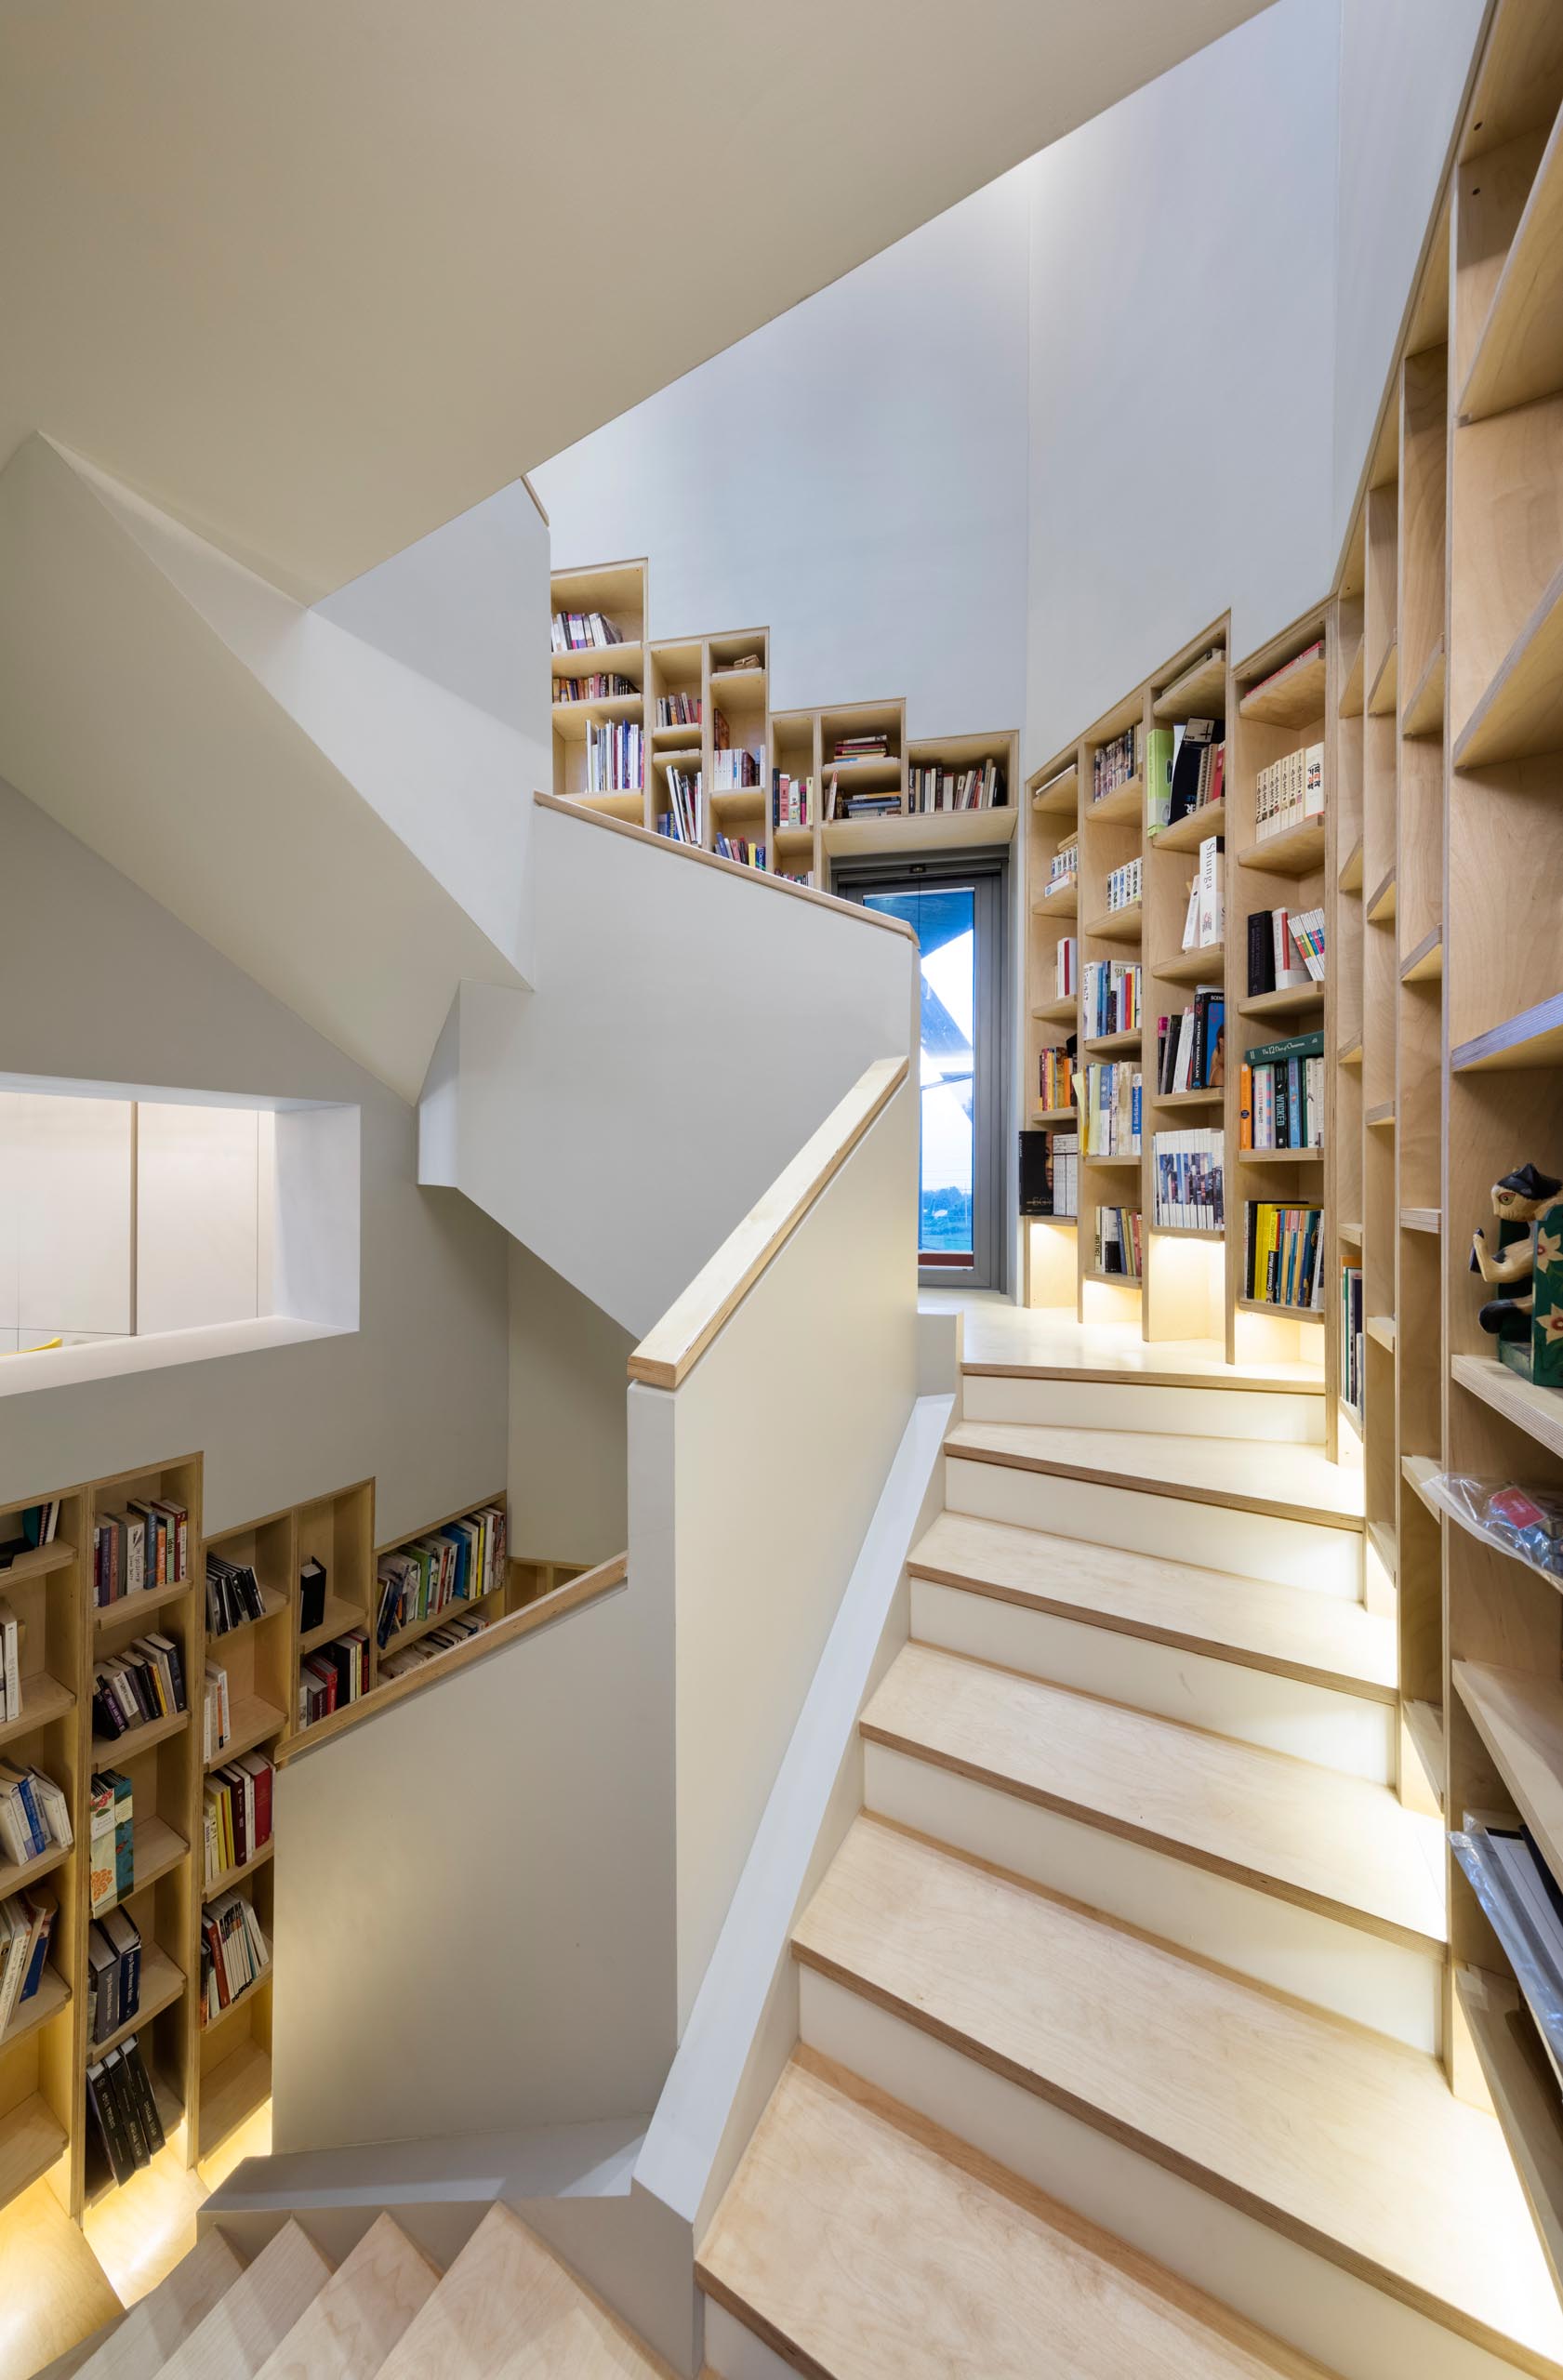 A built-in bookshelf that follows the staircase in a modern home.